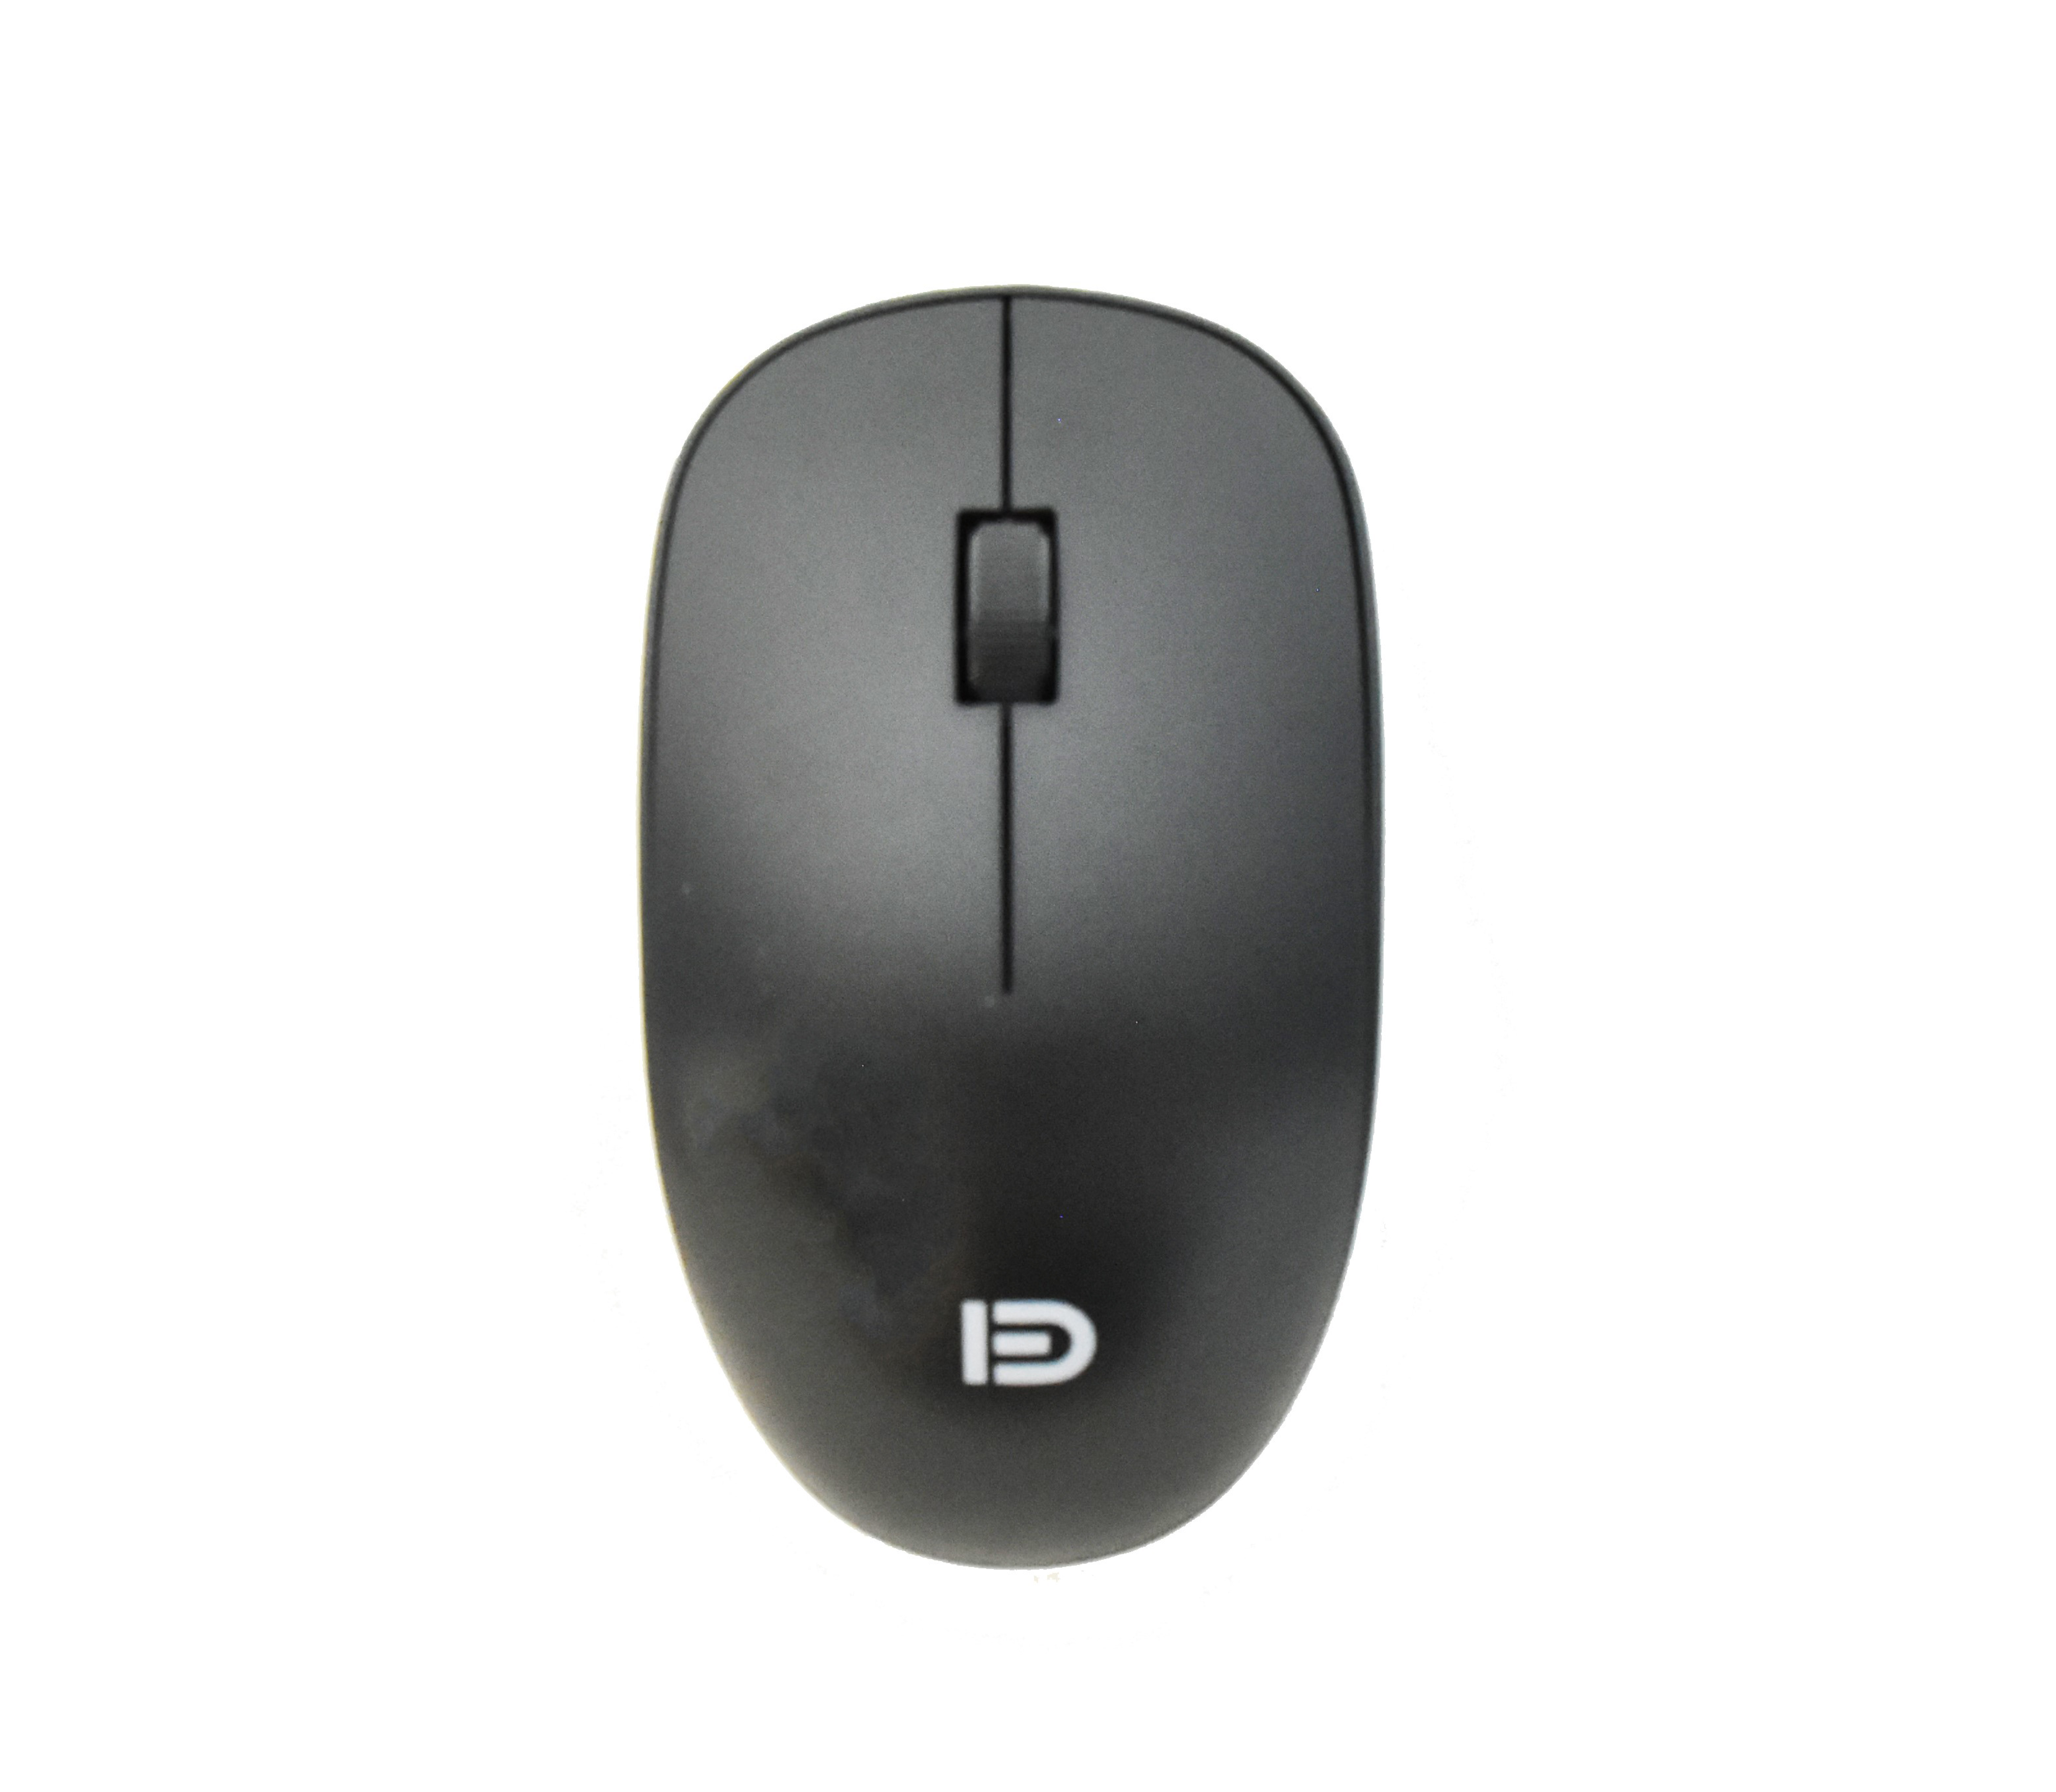 FD I5 Mouse